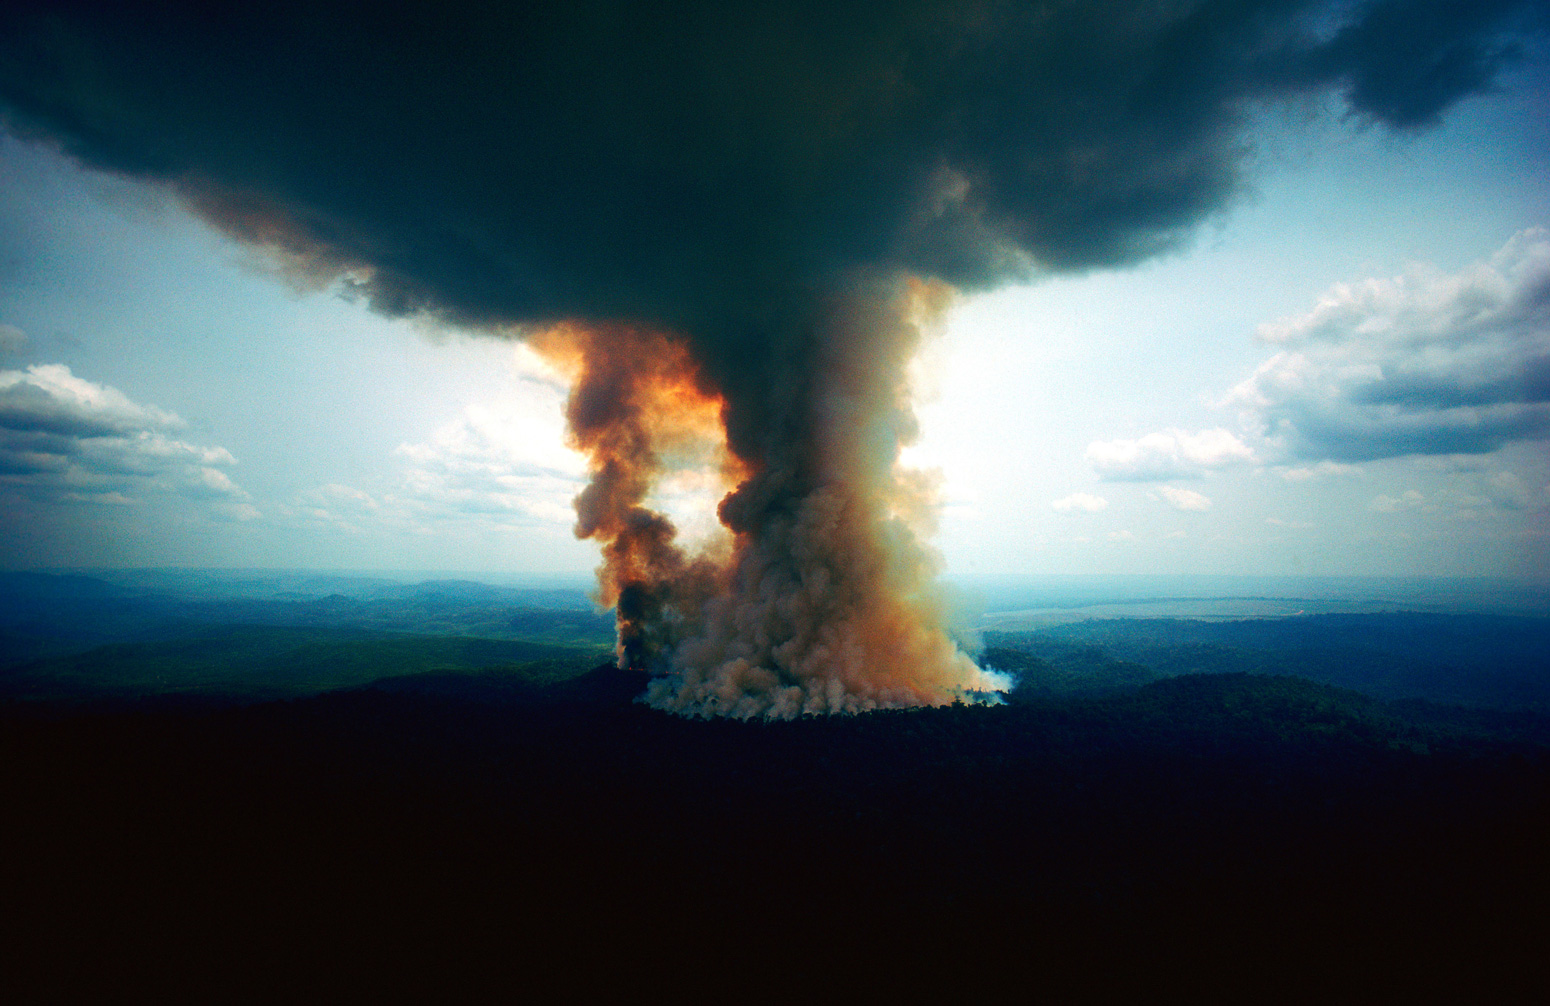 Towering Amazon rainforest fire in Brazil